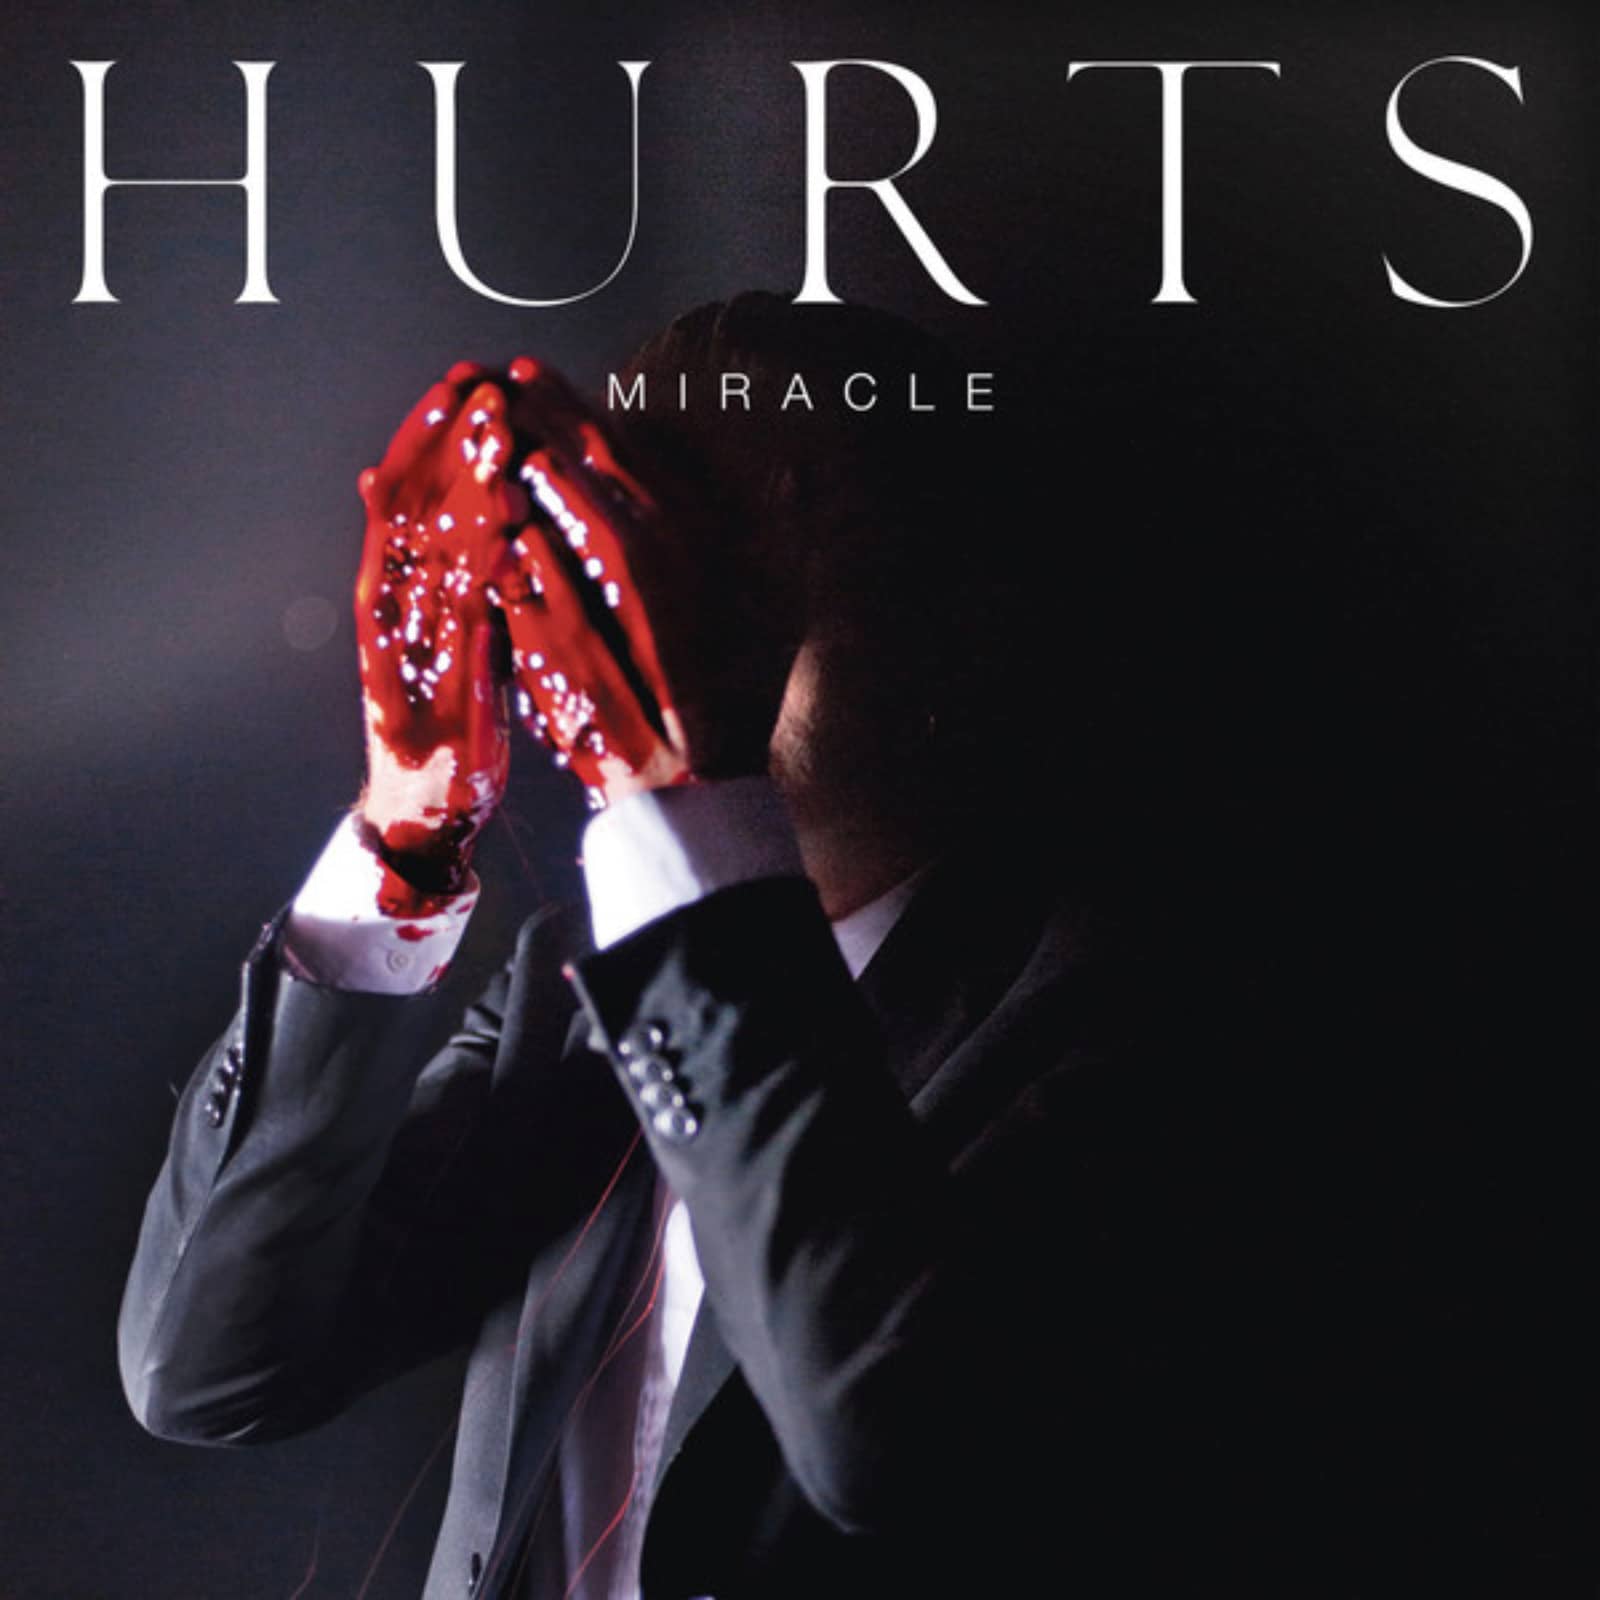 Hurts won. Hurts обложки. Hurts обложки альбомов. Hurts Miracle. Группа hurts альбомы.